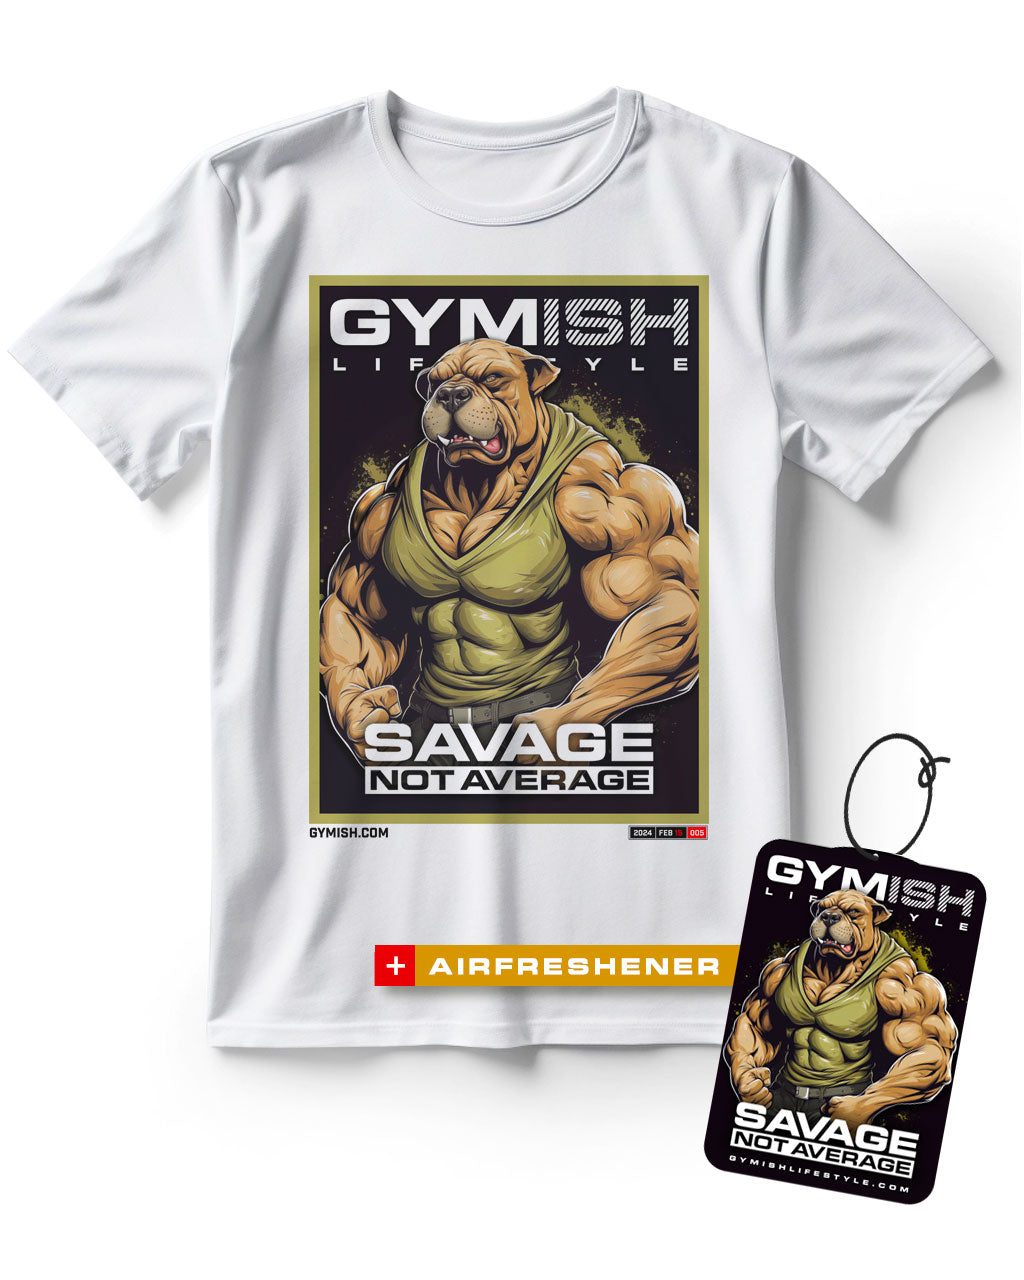 Pitbull Savage Not Average Workout Gym Shirt for Men with Air Freshener Gift Set